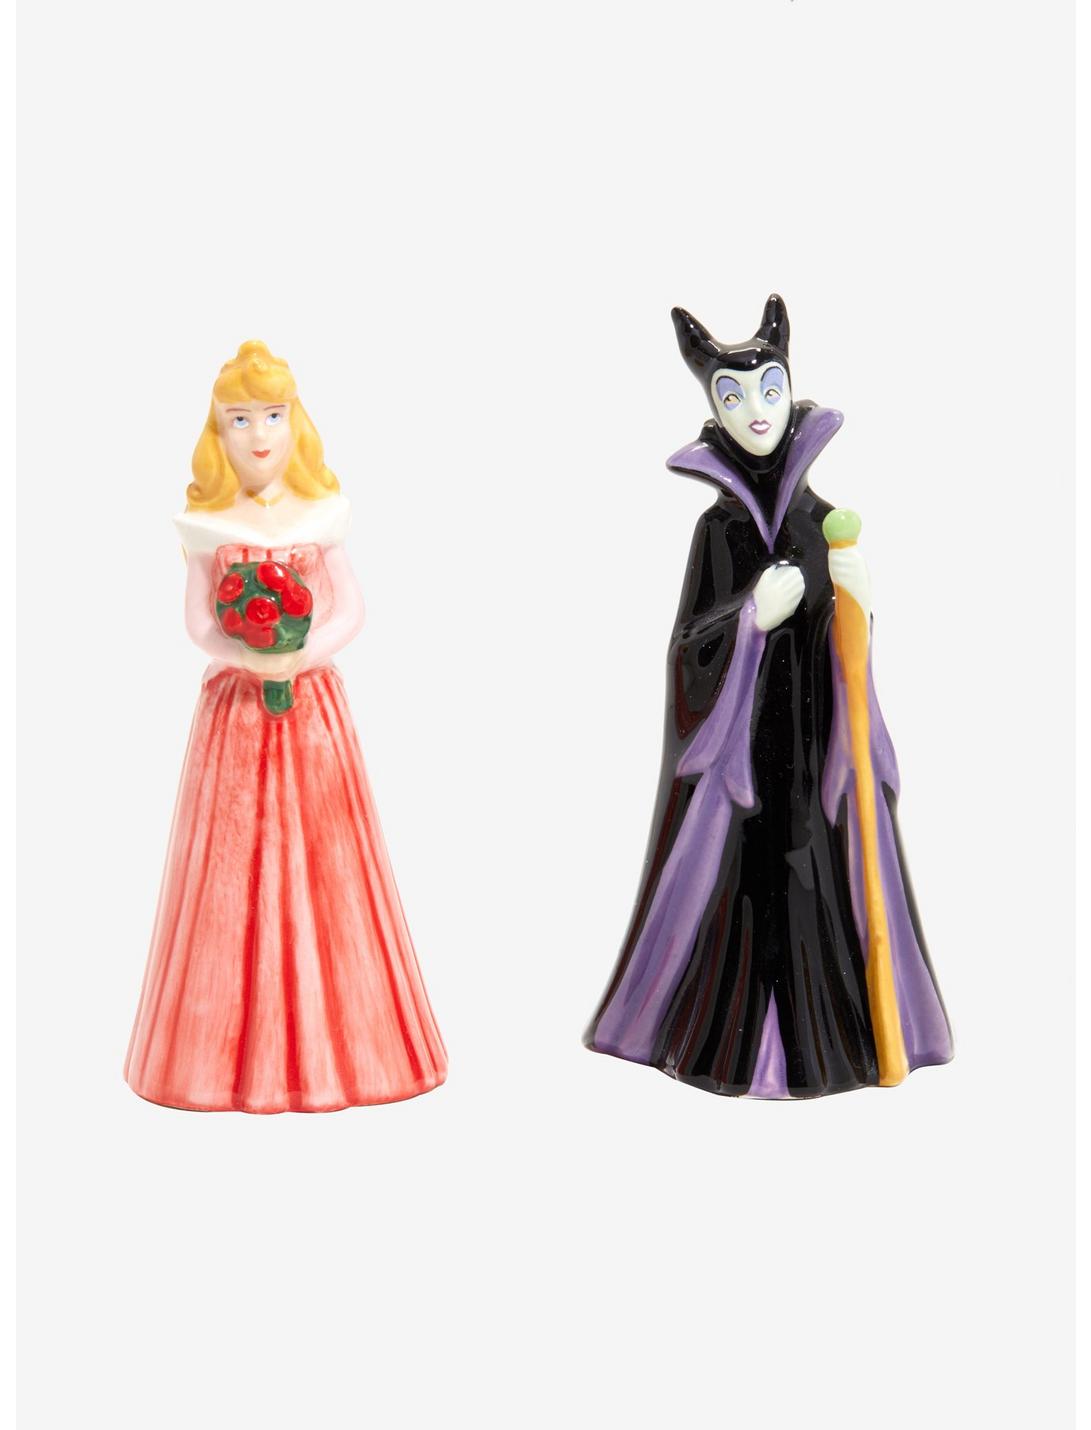 Sleeping Beauty and Maleficent Disney Ceramics Salt and Pepper Shaker Set